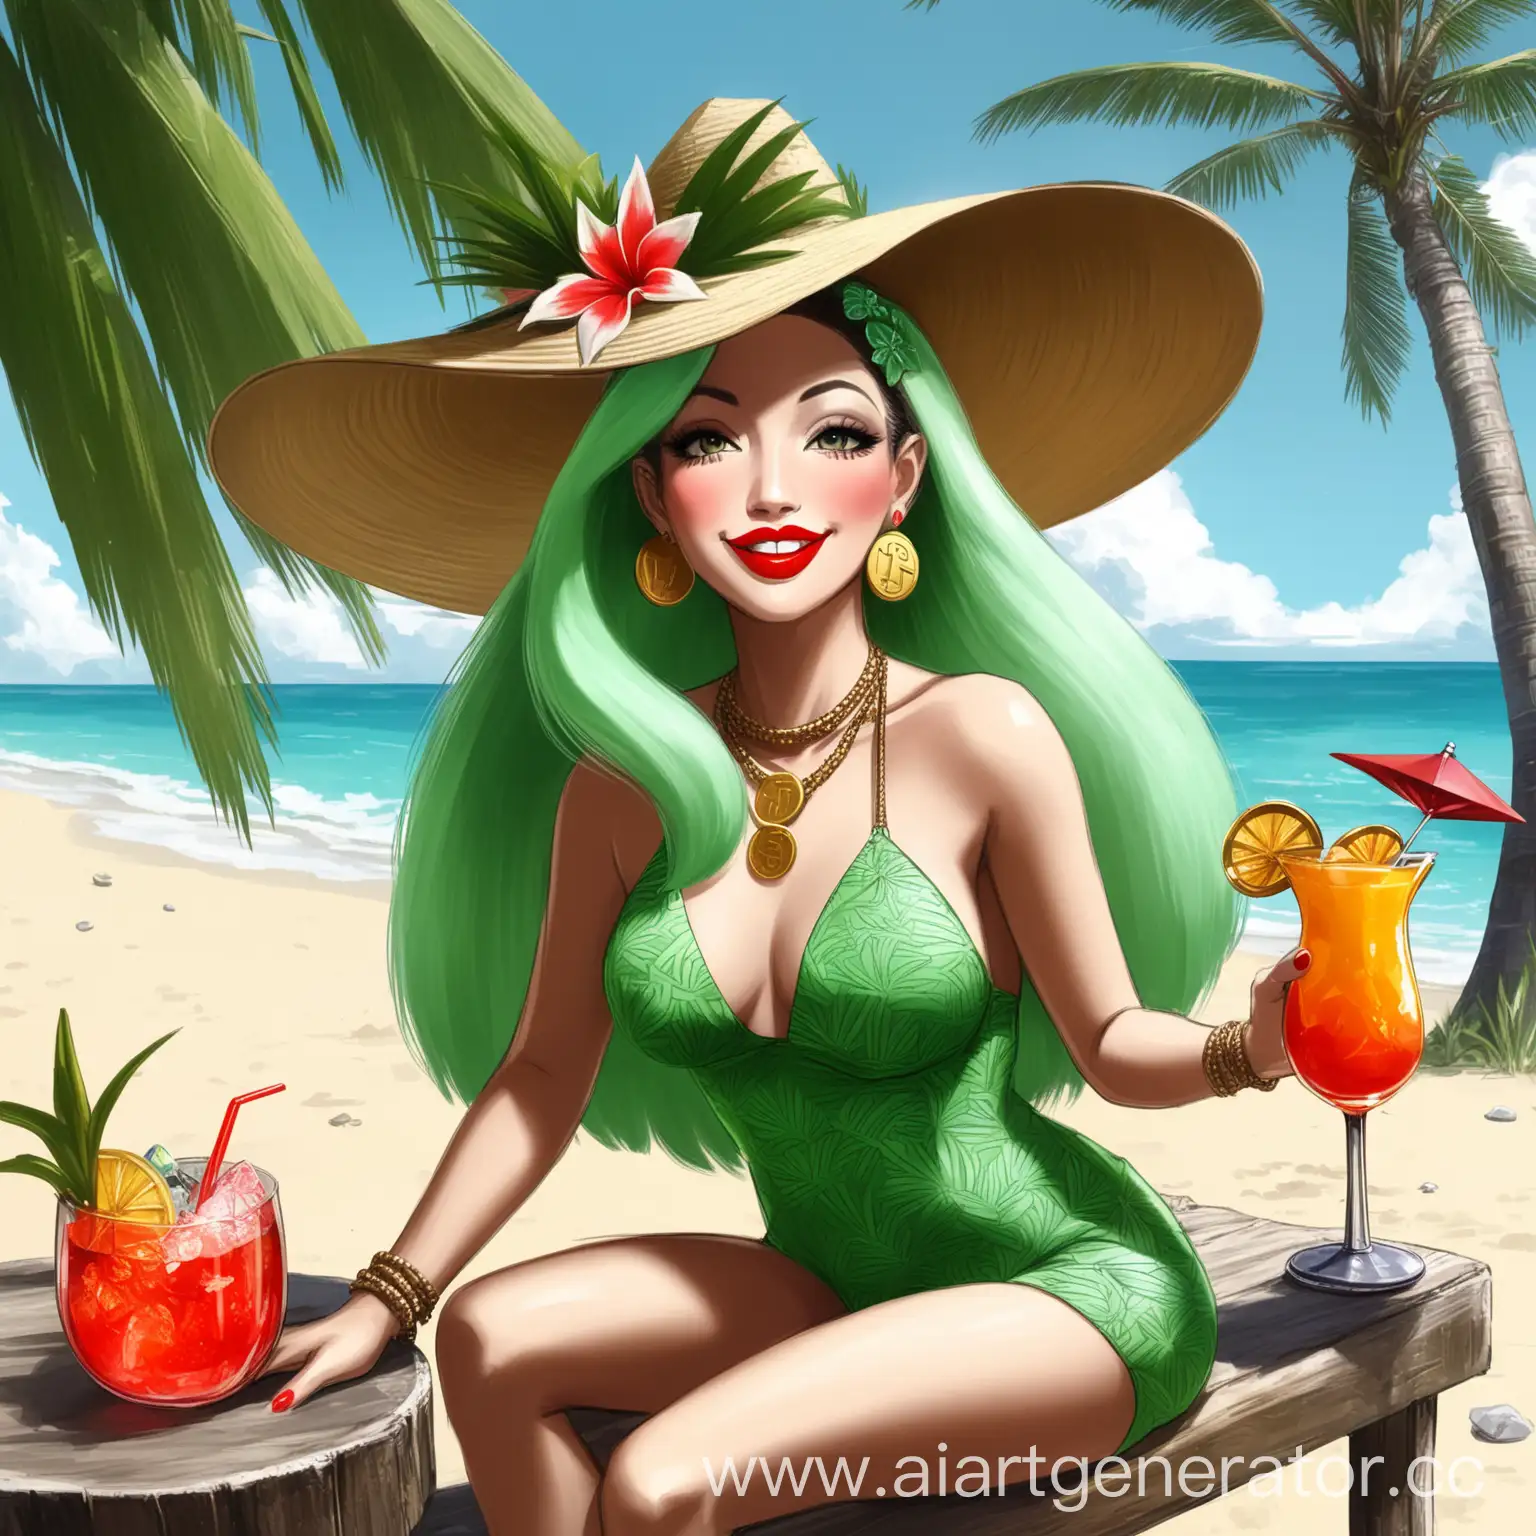 Cheerful-Green-Meme-Coin-Animal-Relaxing-on-Bali-Beach